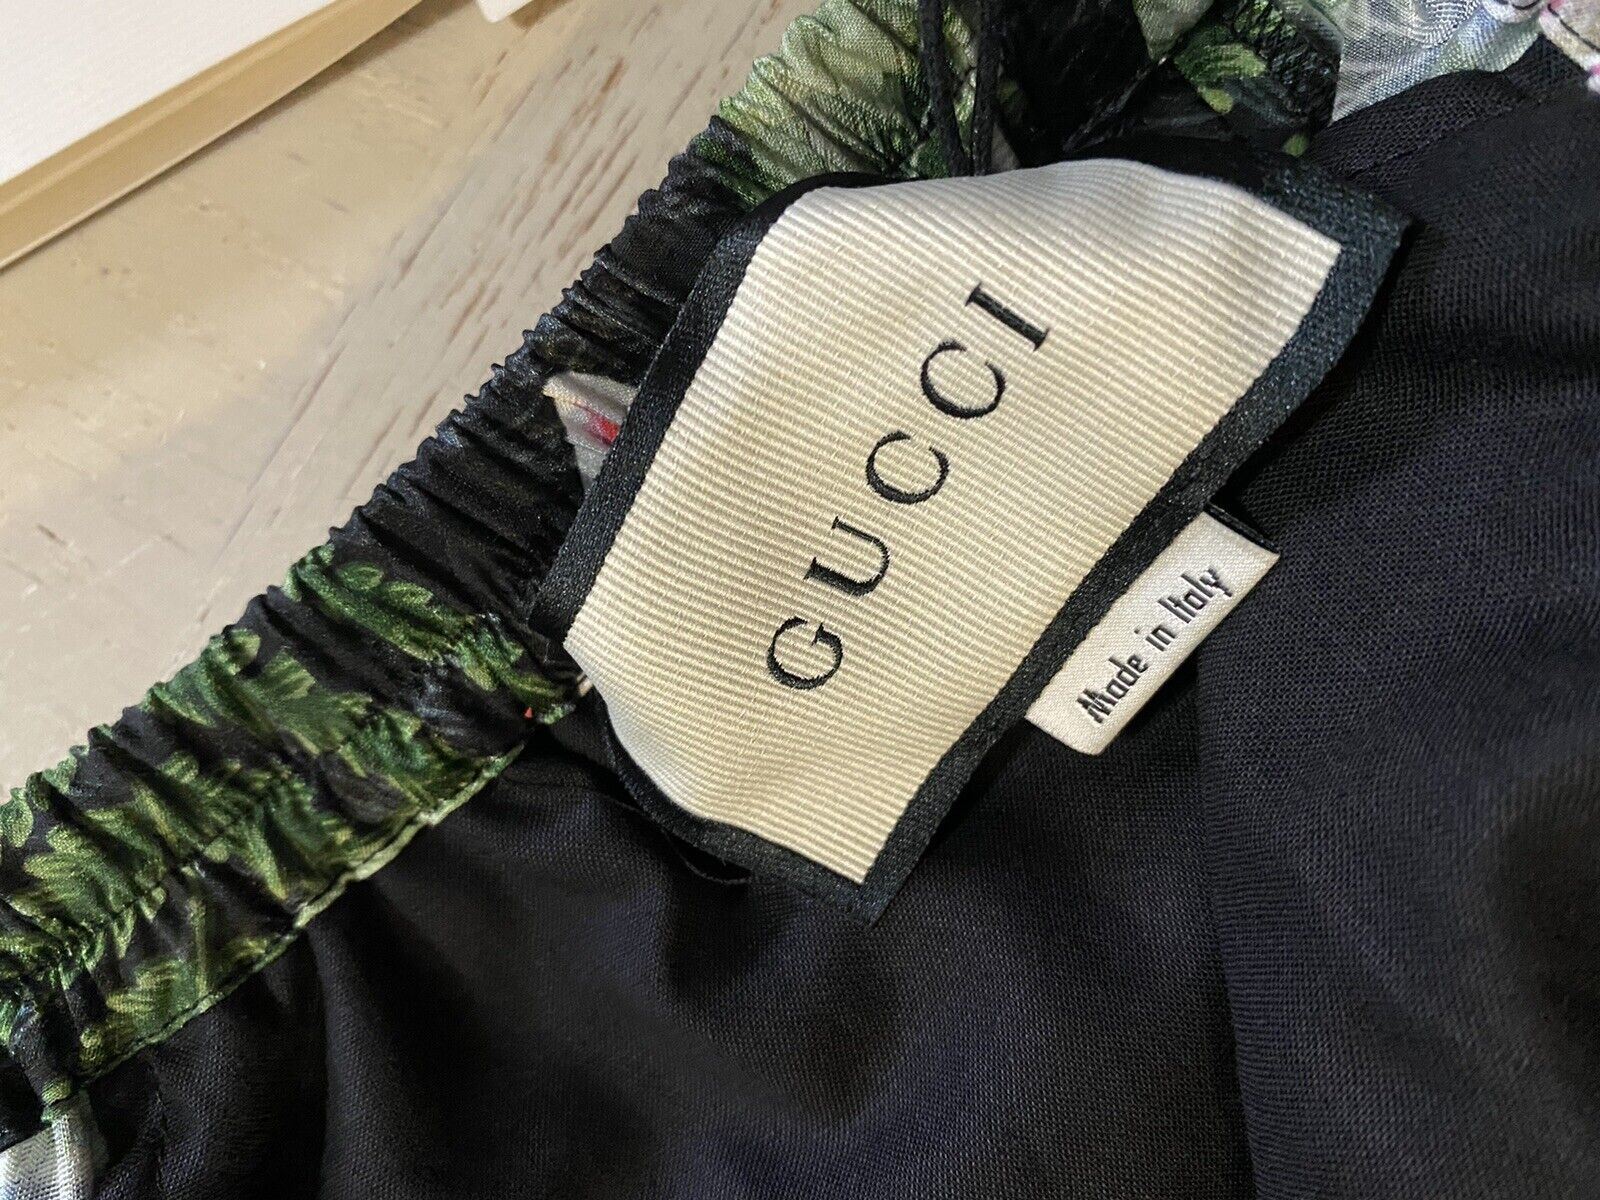 NWT $980 Gucci Men’s Gucci Soul Monogram Short Pents Black/Green/Multi 28 US/44